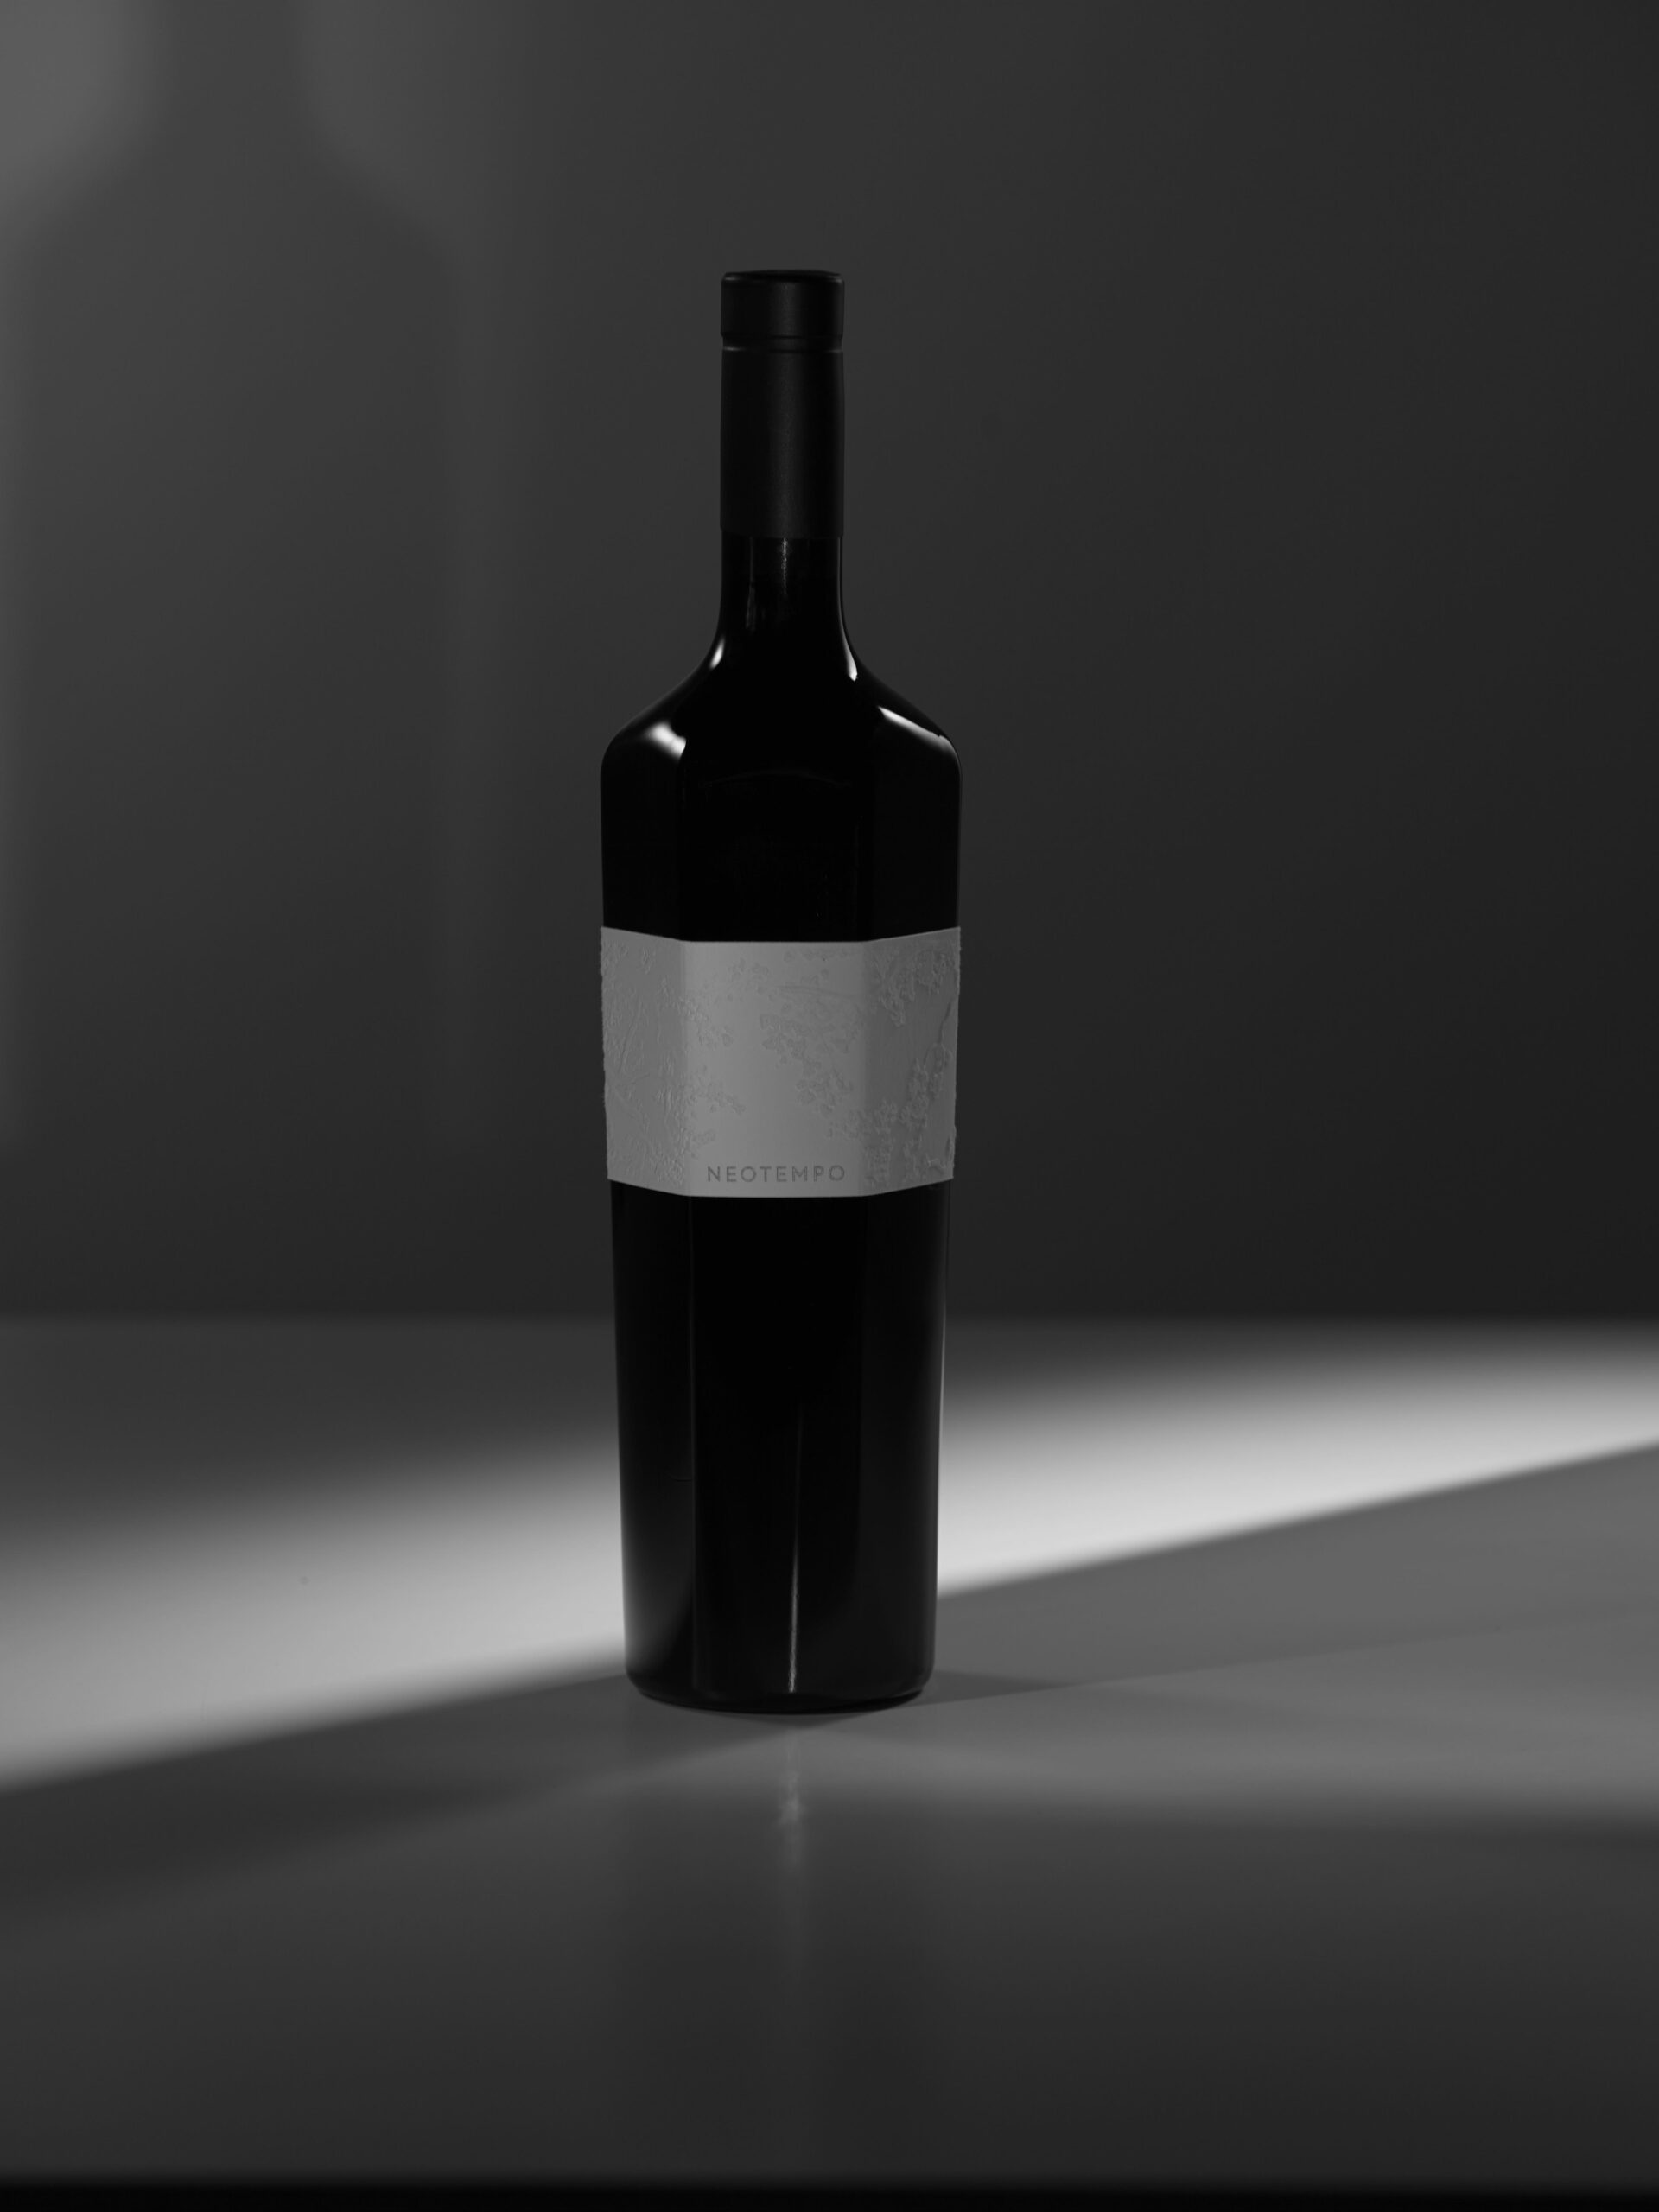 Neotempo hexagonal wine bottle